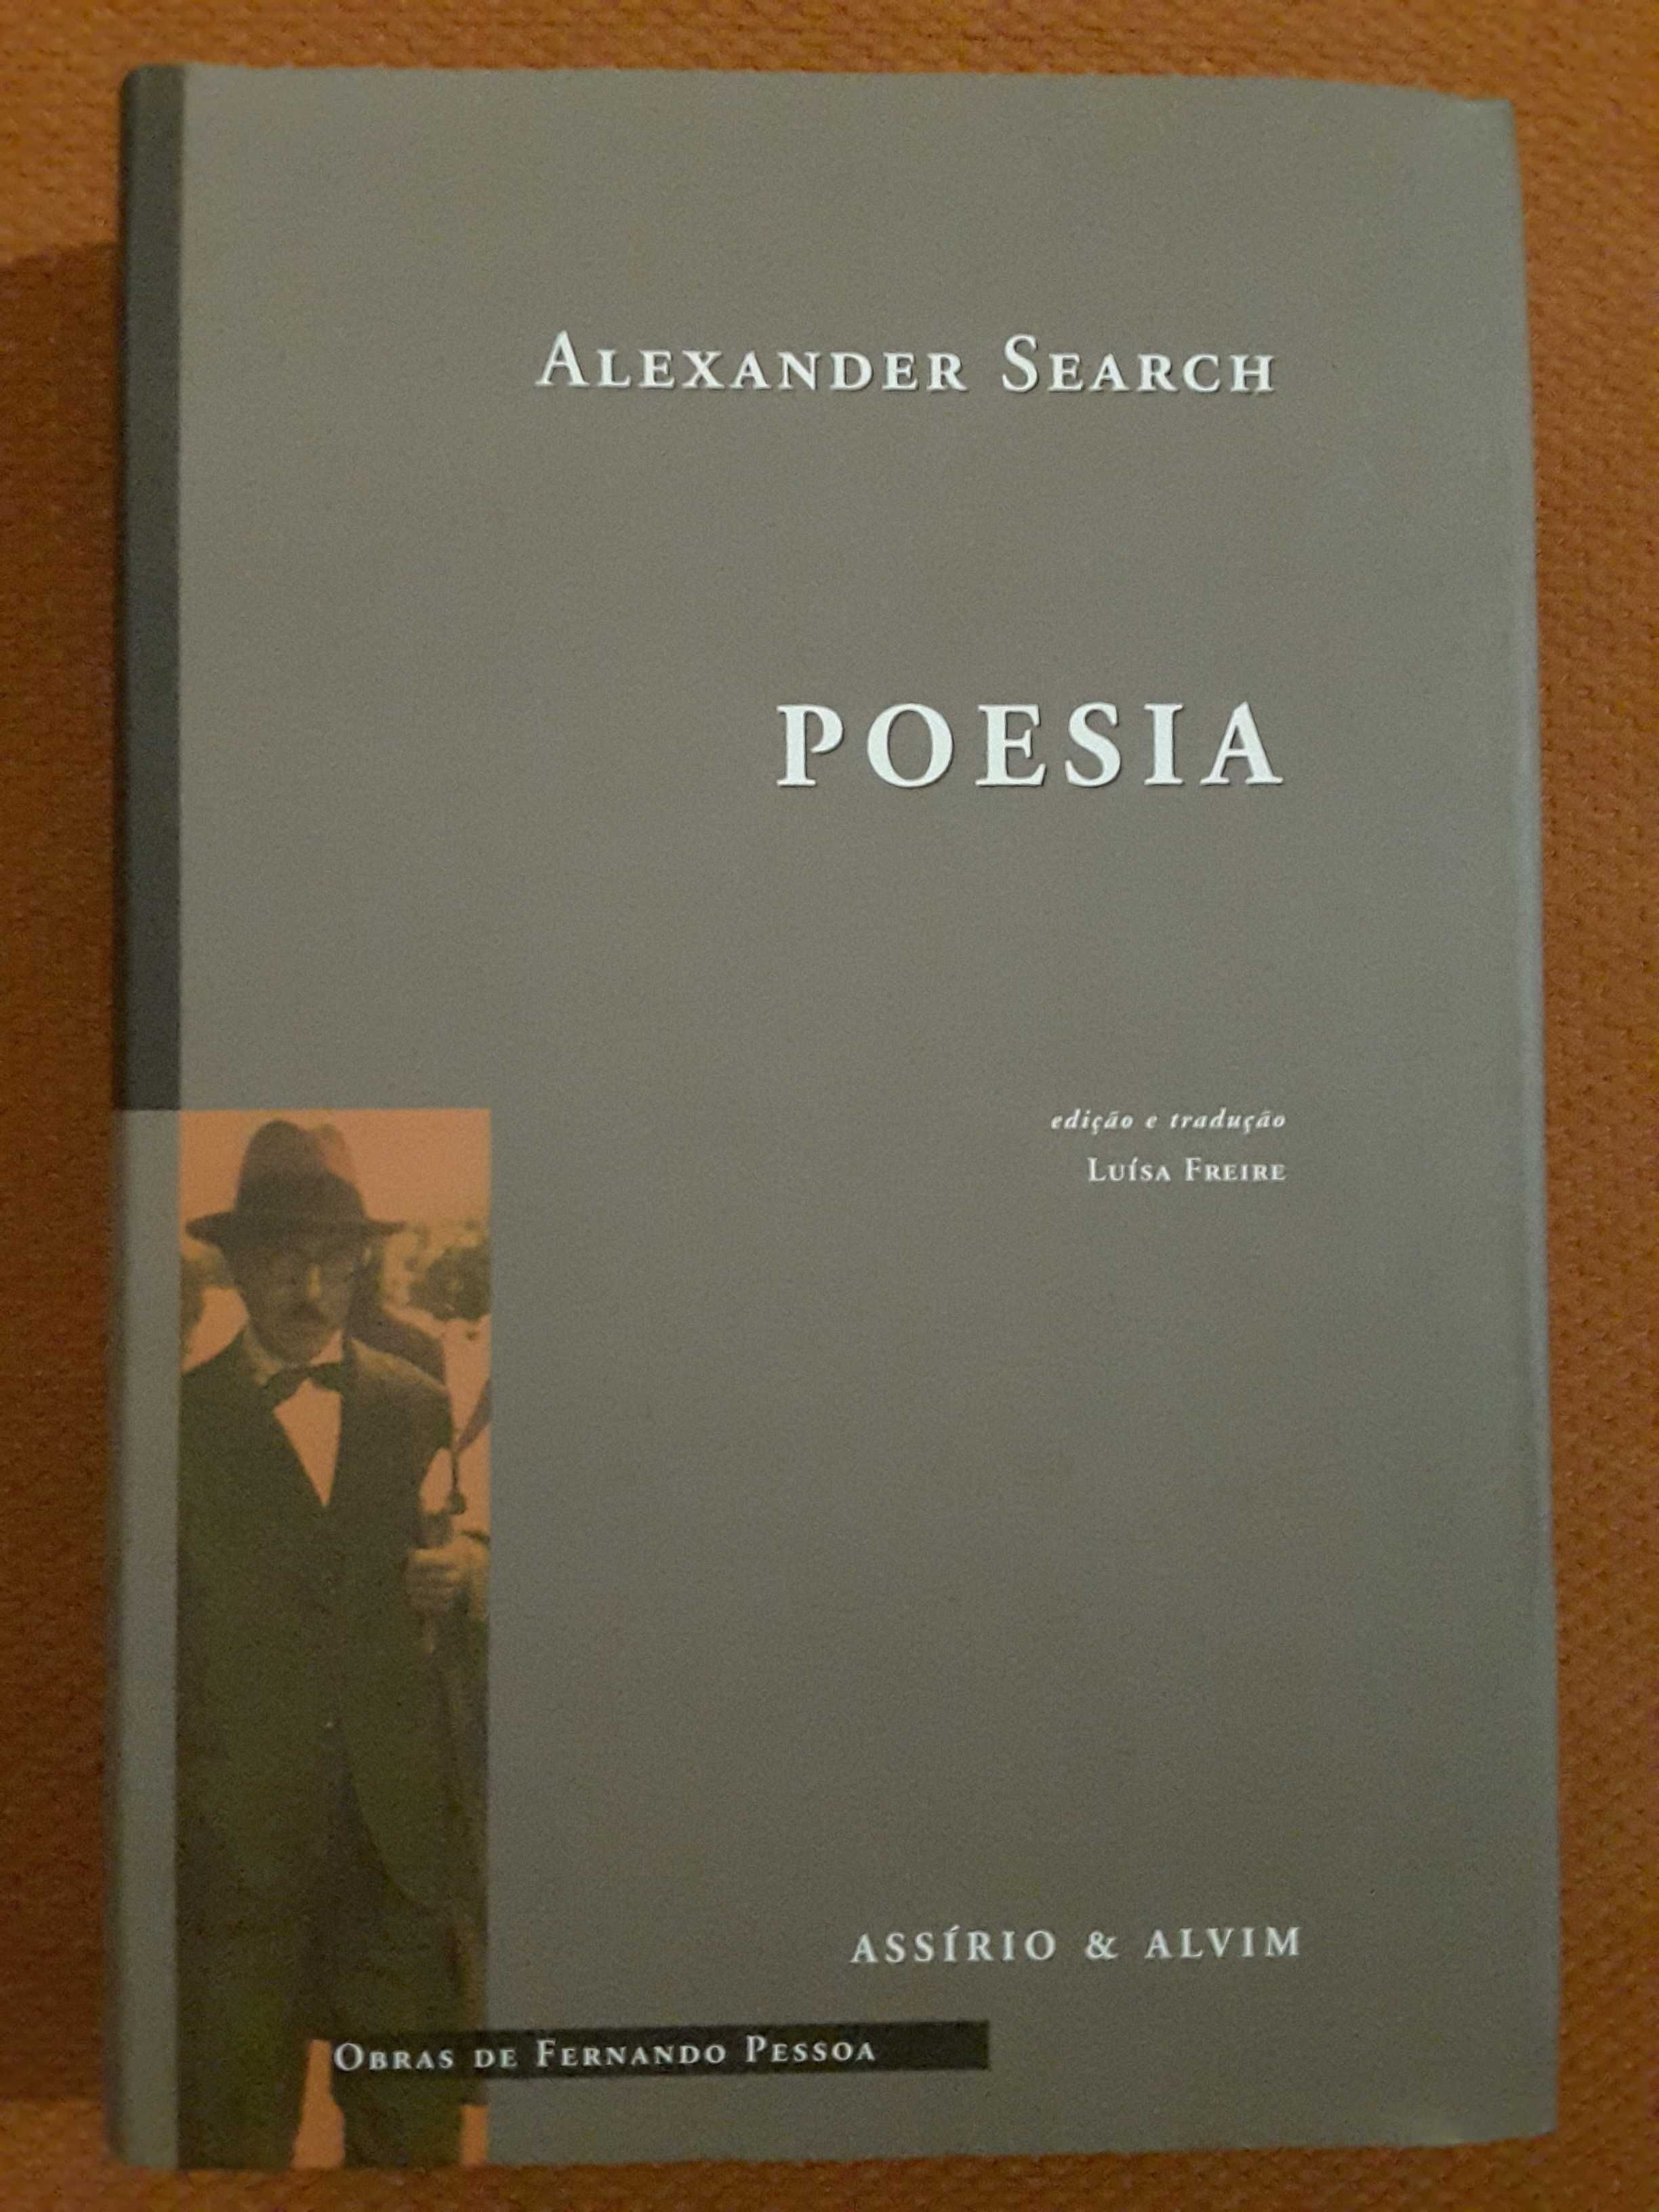 Alfredo Pimenta Terra e Poesia / A. Search (F. Pessoa): Poesia